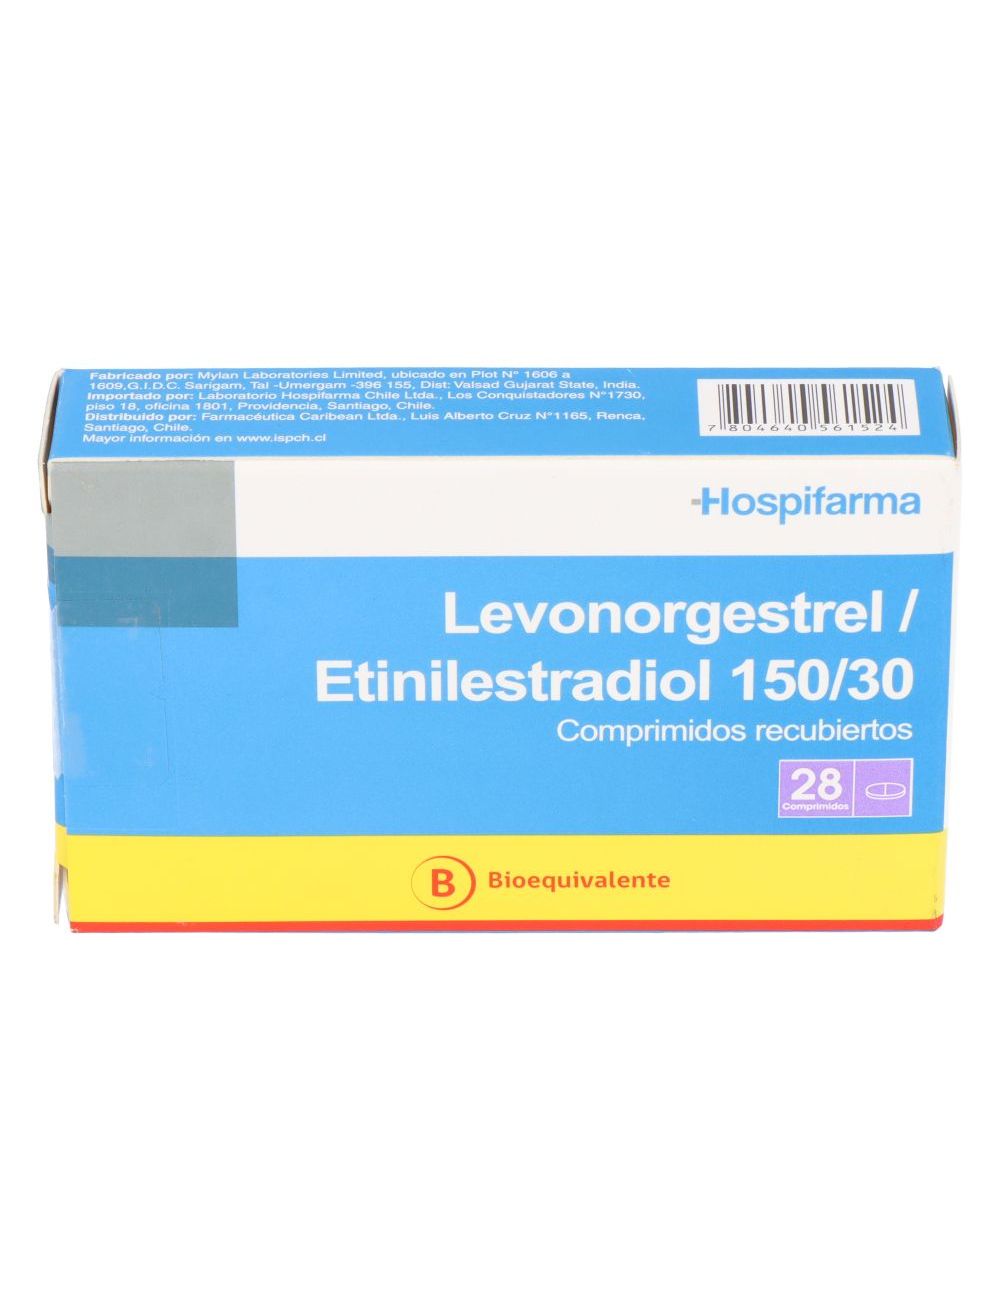 Levonorgestrel Etinilestradiol Mcg Comprimidos Bioequivalente Hospifarma